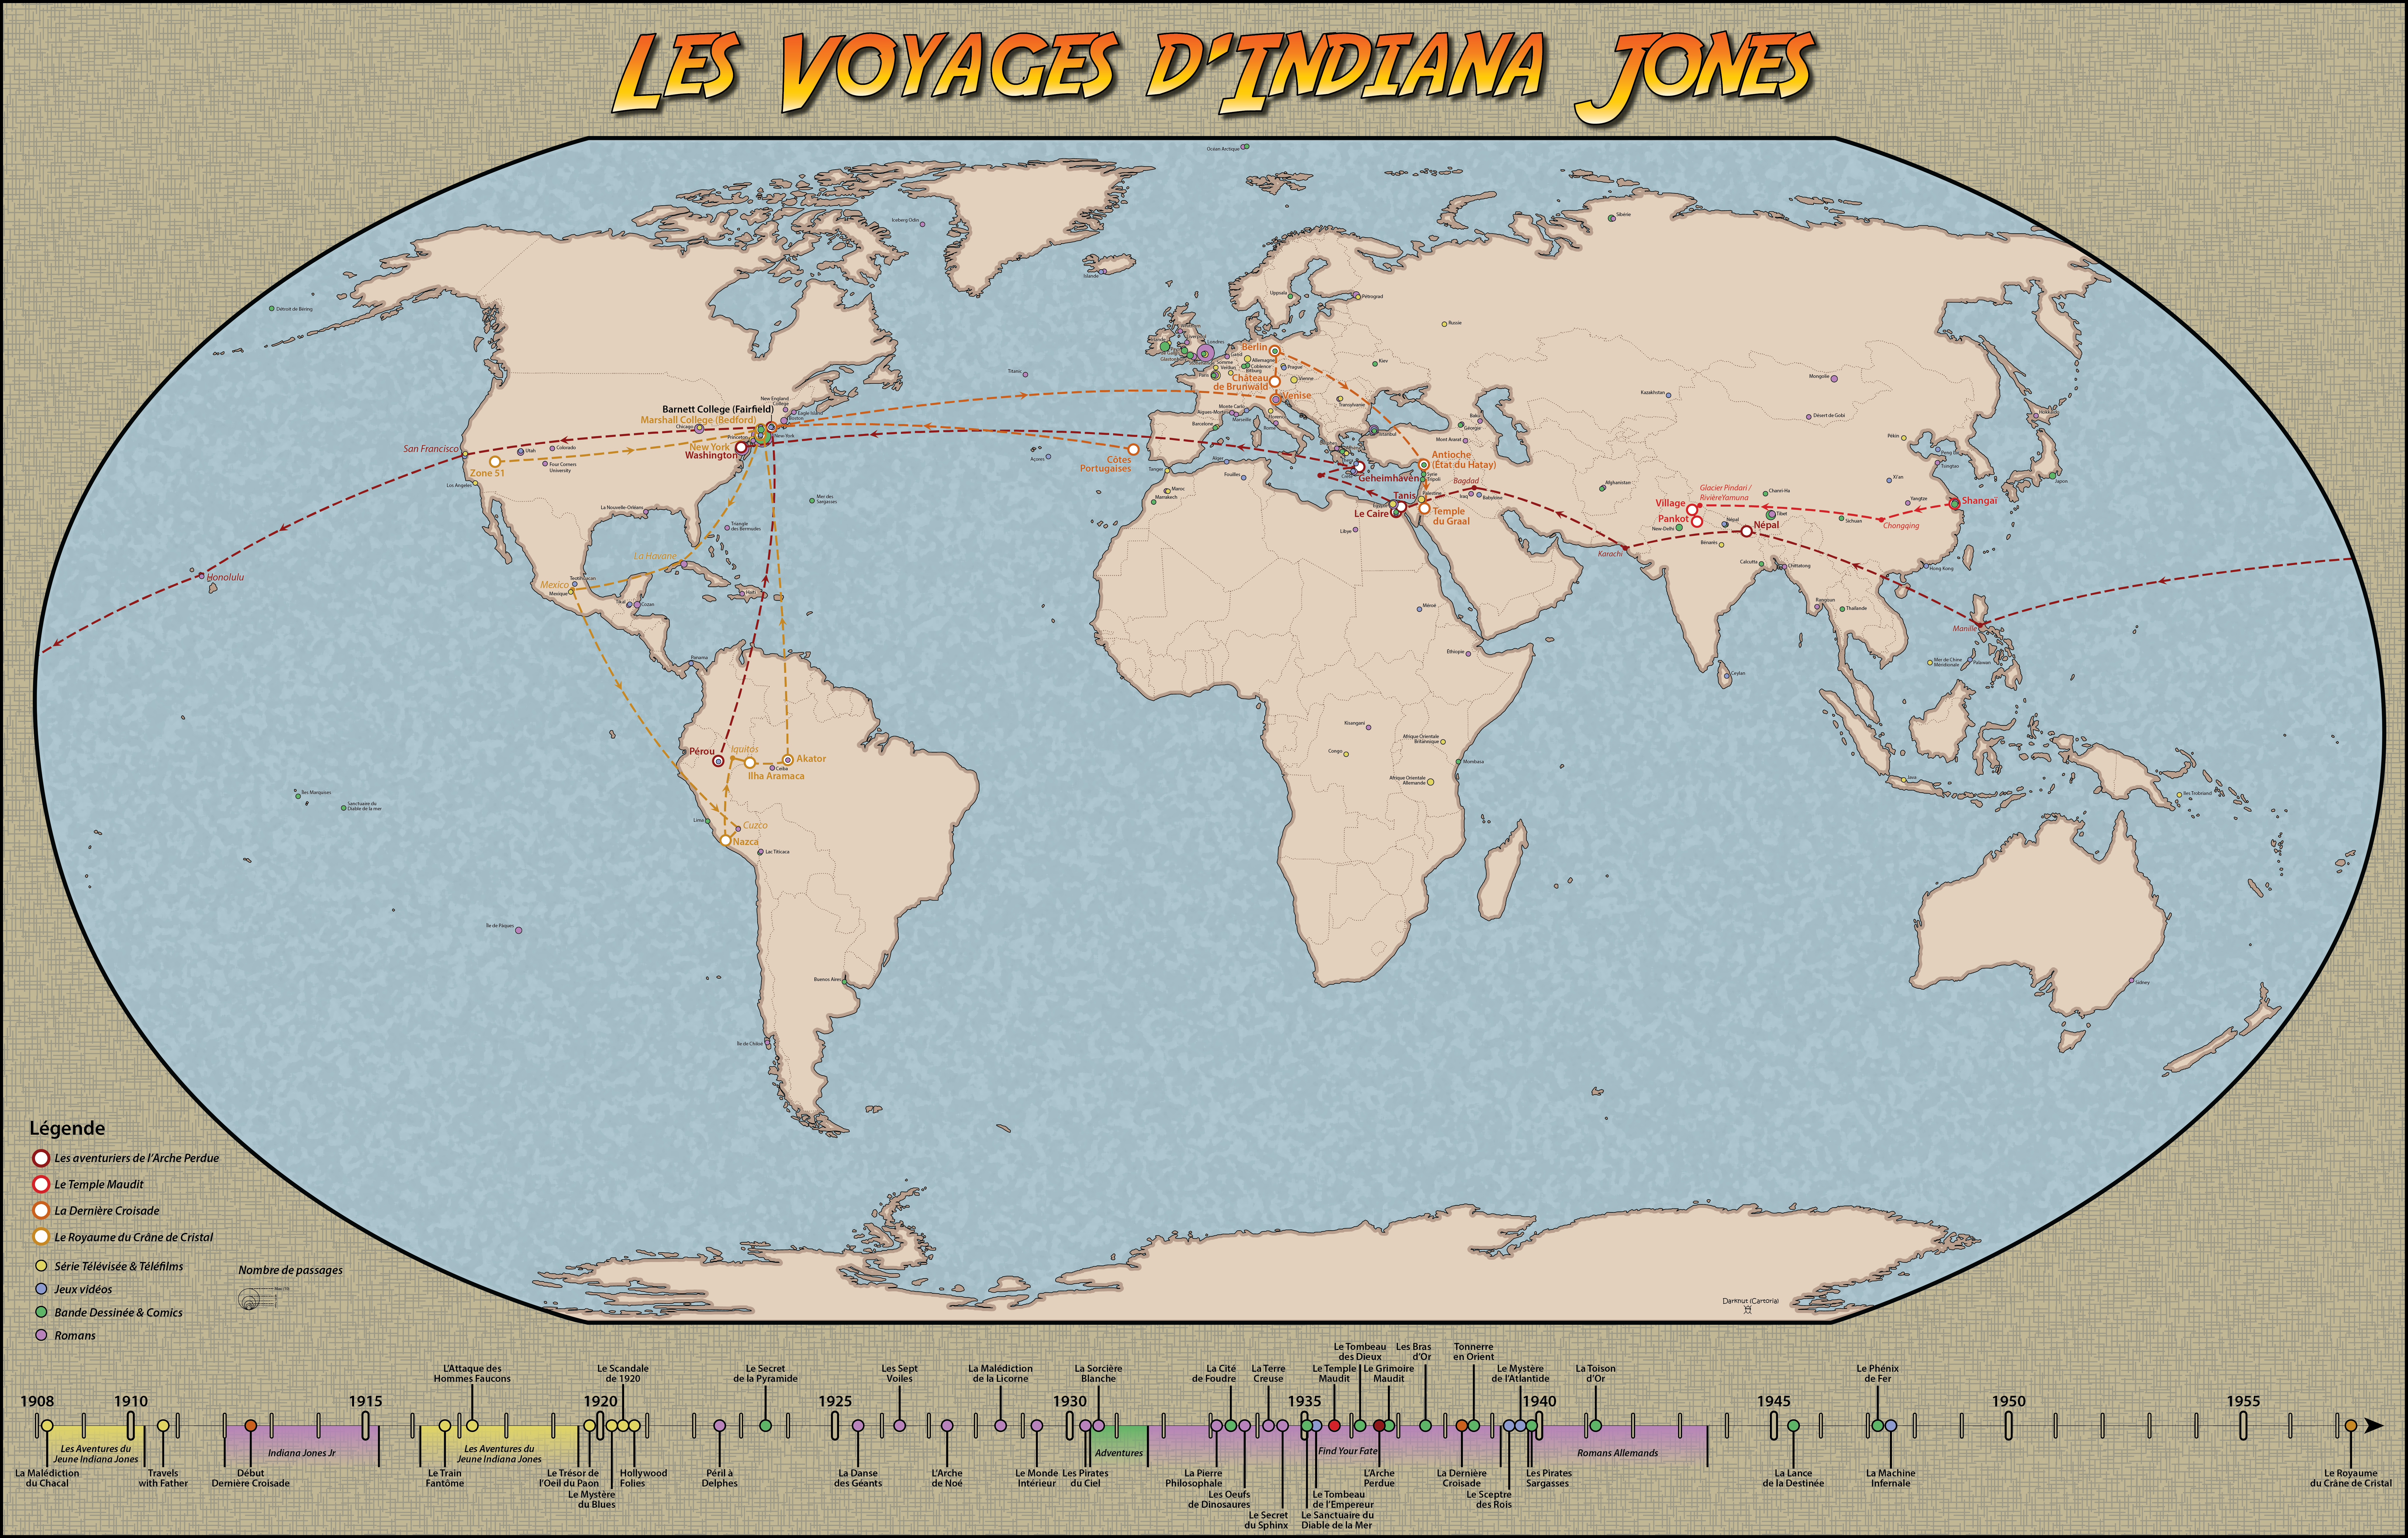 Cartes des voyages d'Indiana Jones by Cartoria on DeviantArt